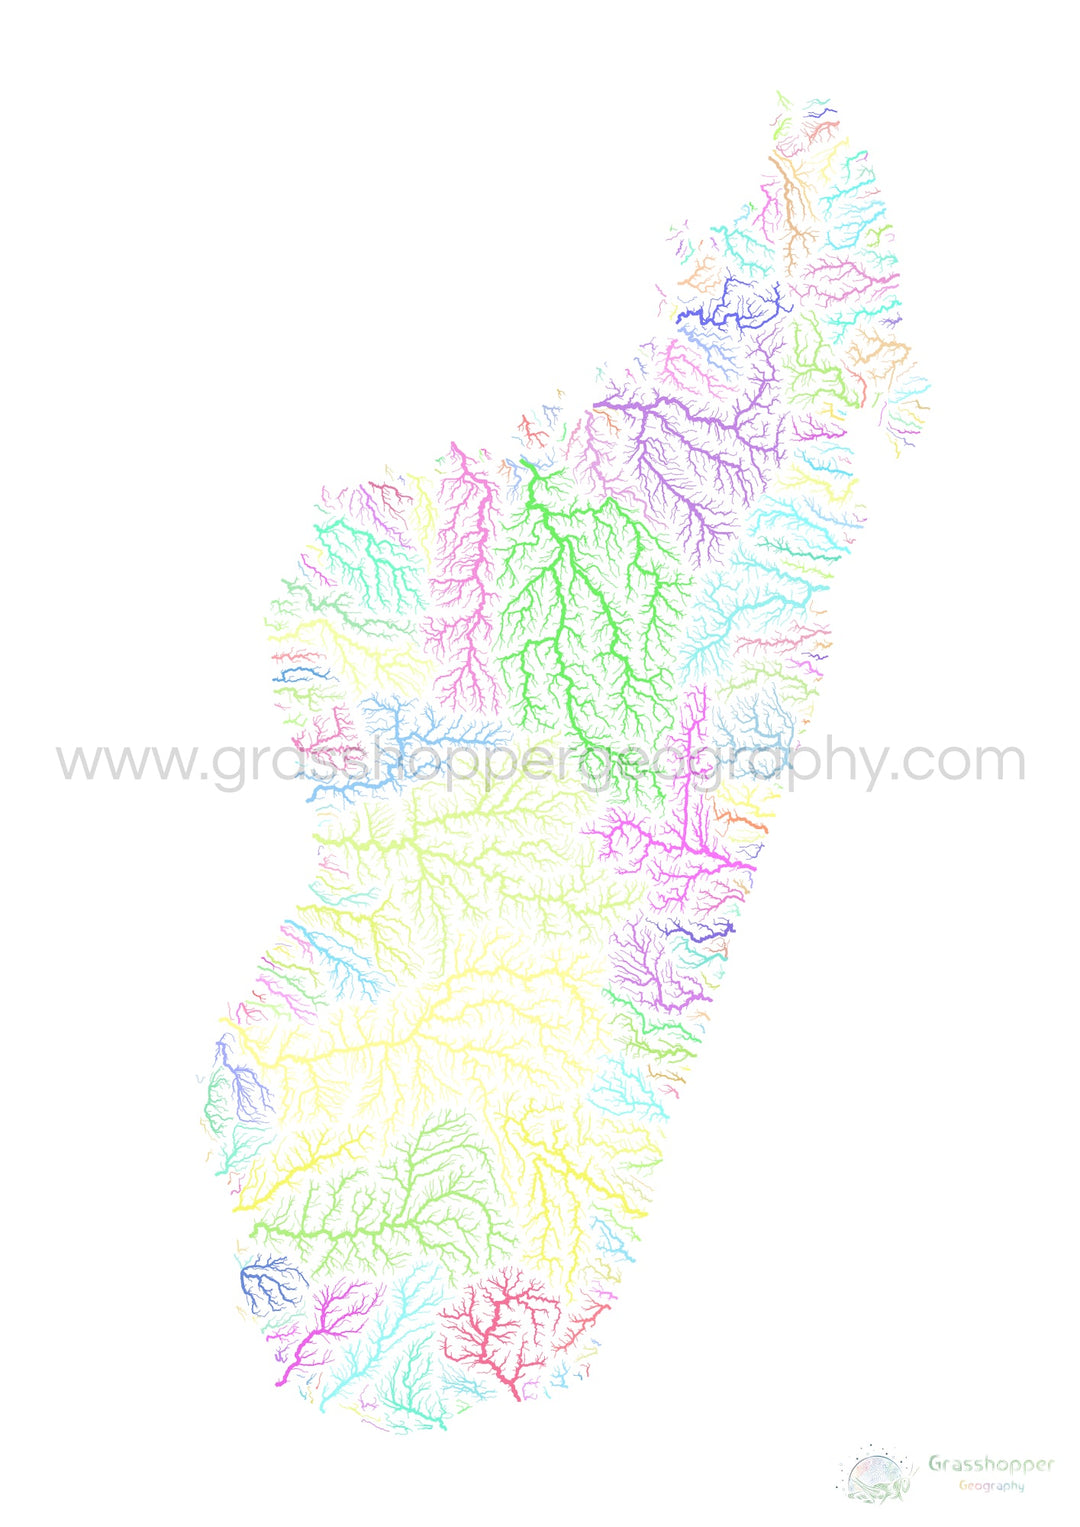 River basin map of Madagascar, pastel colours on white - Fine Art Print